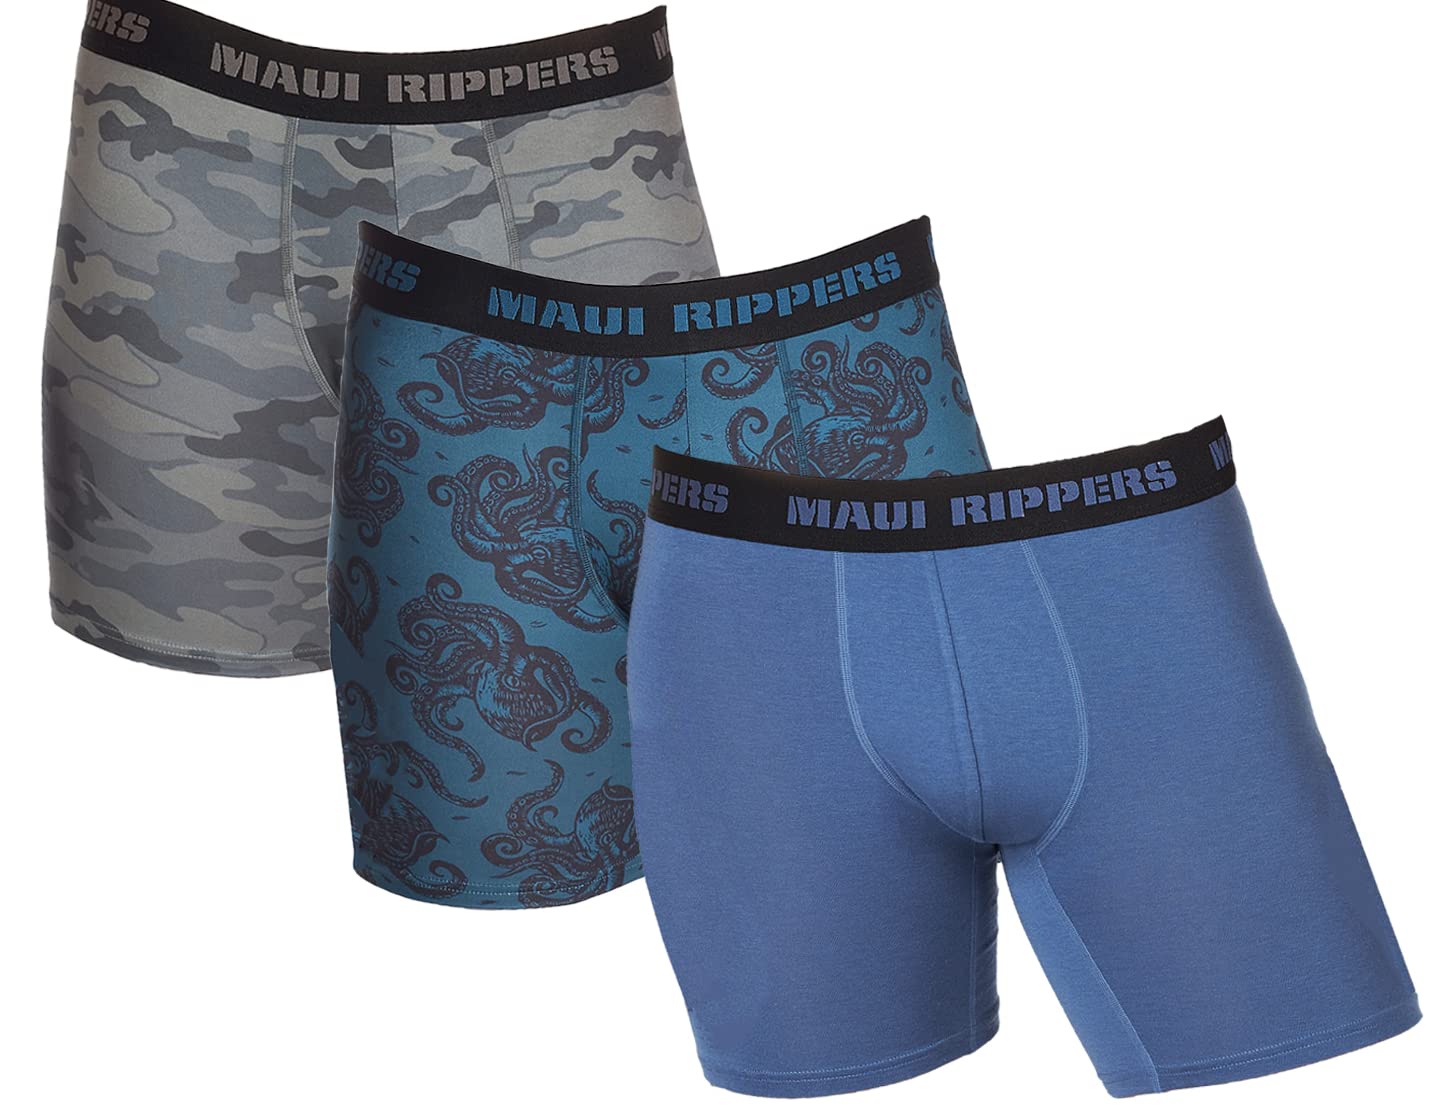 Maui Rippers Men's Boxer Briefs - 3 Pack - LIFEGUARD OUTLET